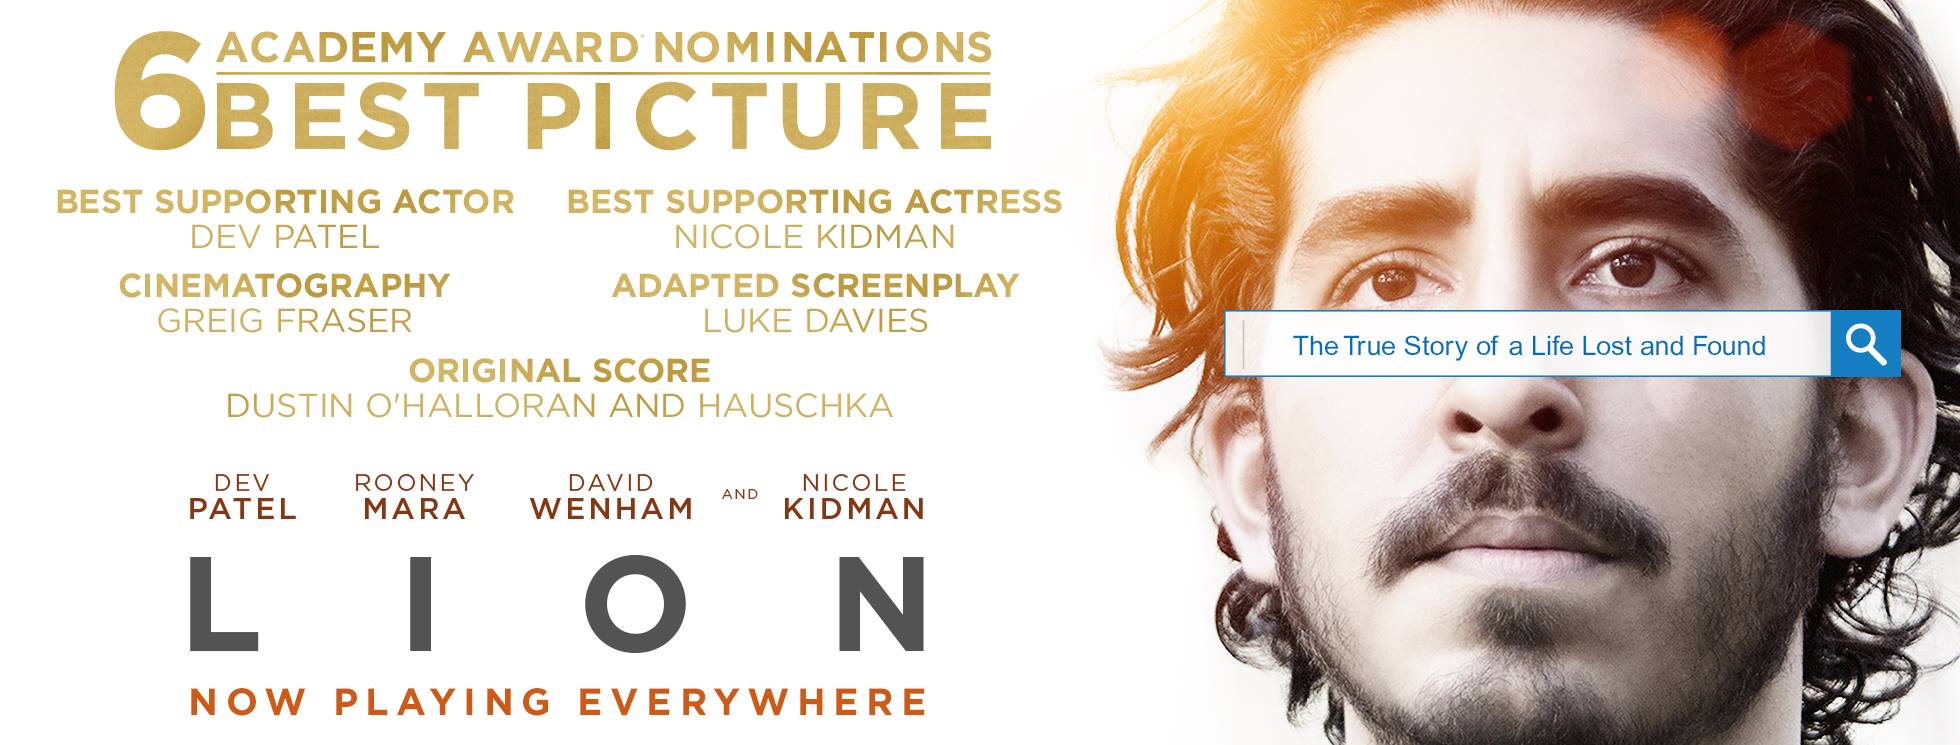 Dustin O’Halloran and Hauschka nominated for Academy Award.